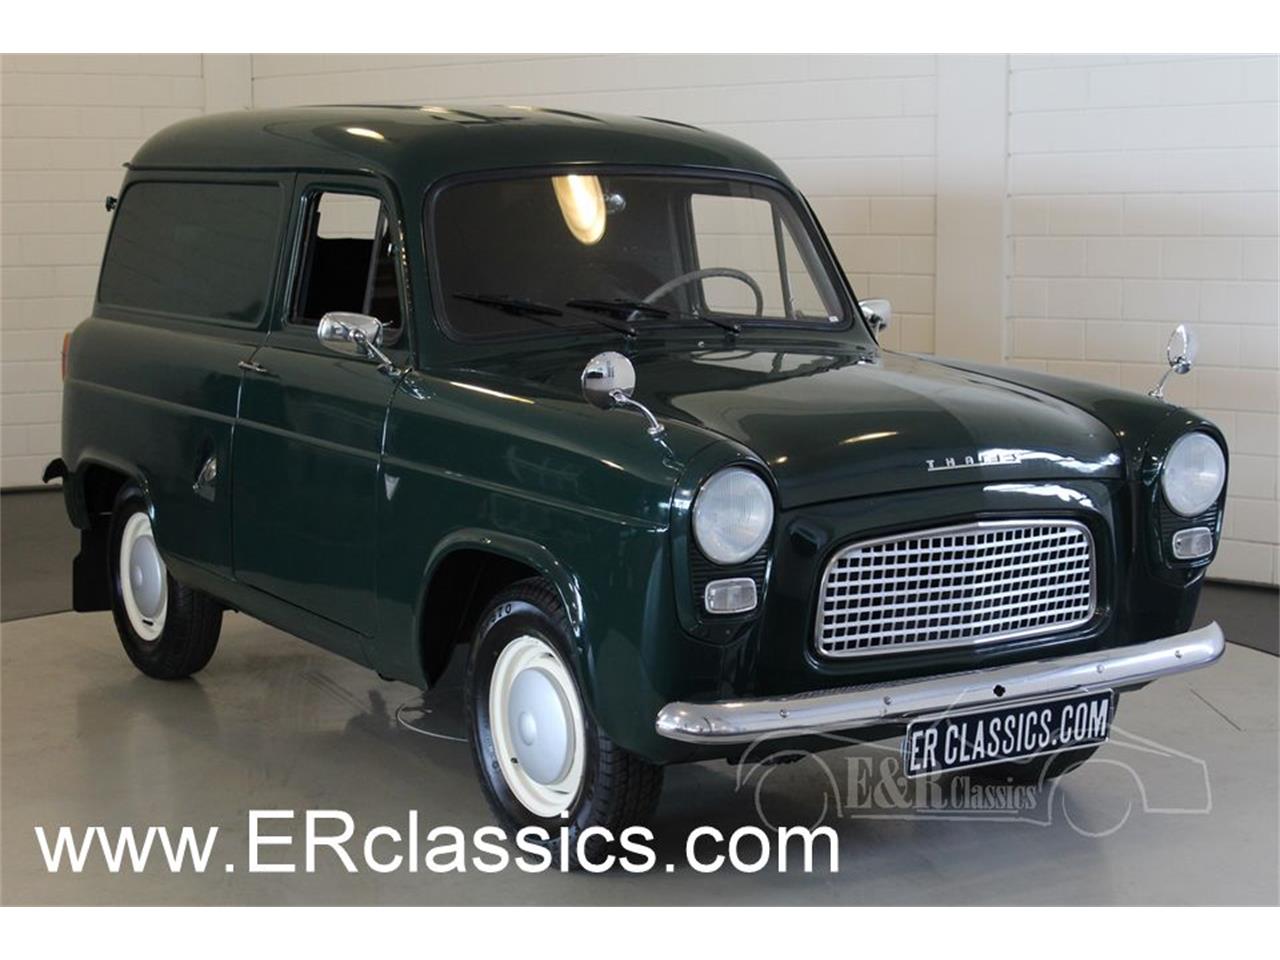 1958 Ford Thames Van for Sale | ClassicCars.com |